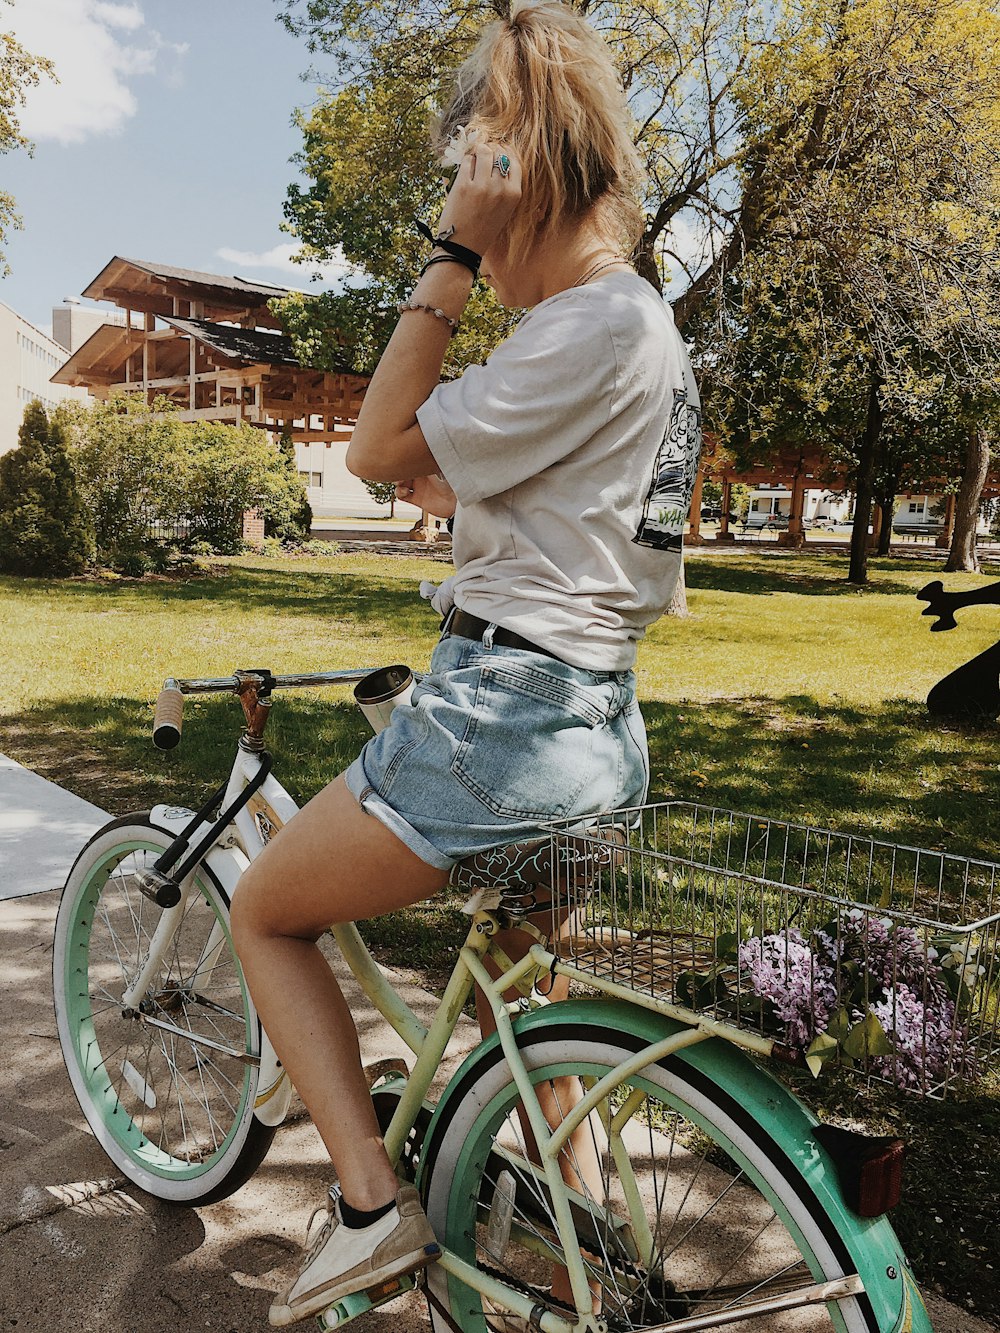 Man riding white and green cruiser bike photo – Free Bike Image on Unsplash